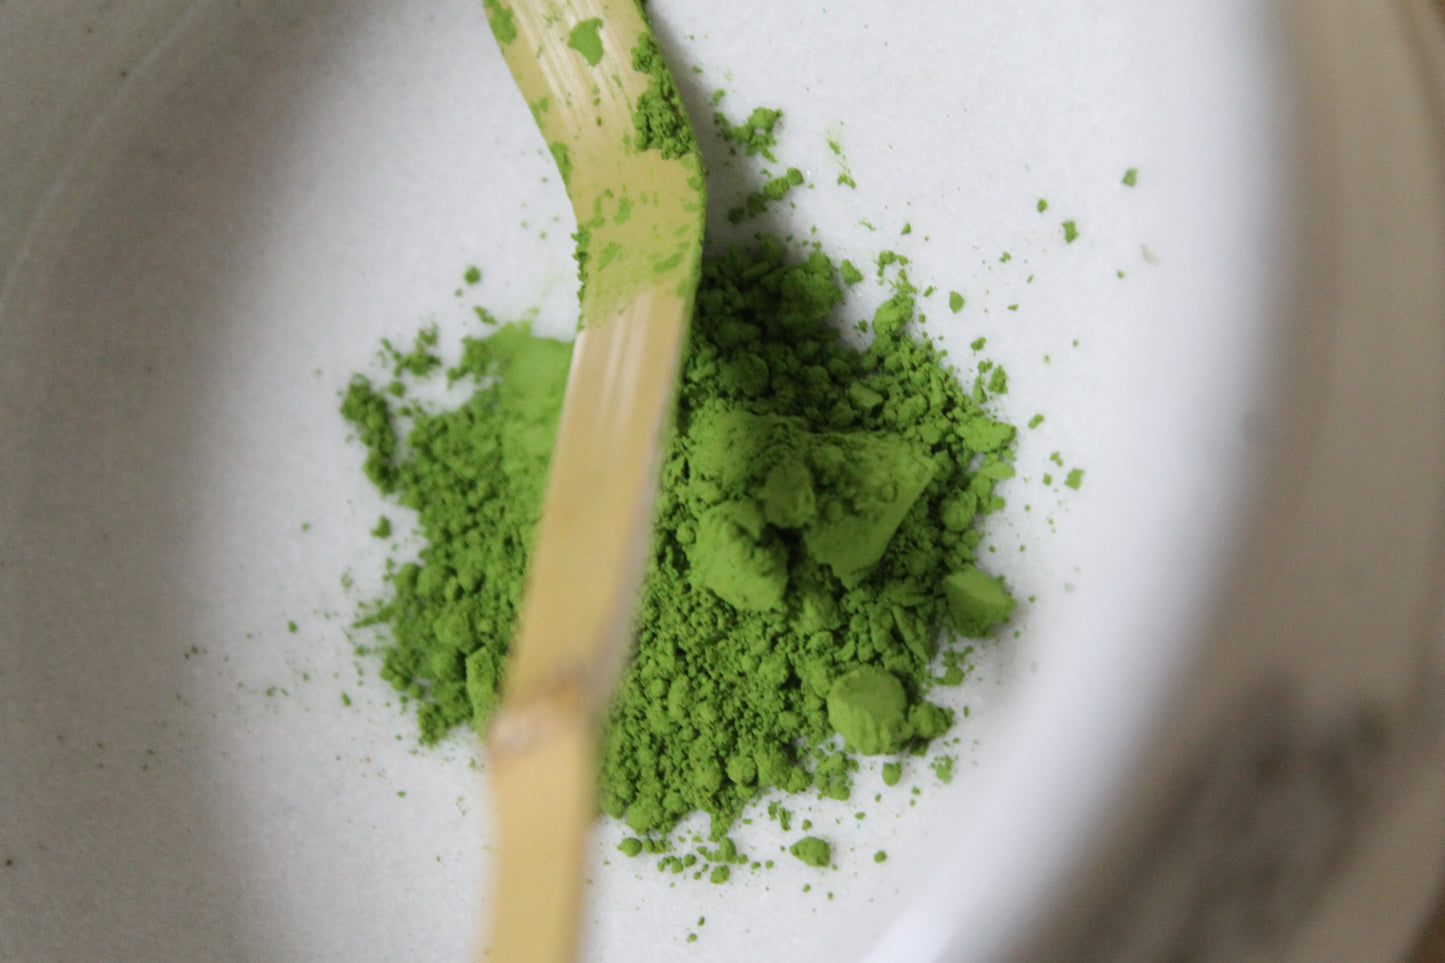 [Ceremonial Grade] Organic Matcha green tea powder from Japan 1kg (2.2lbs) bag